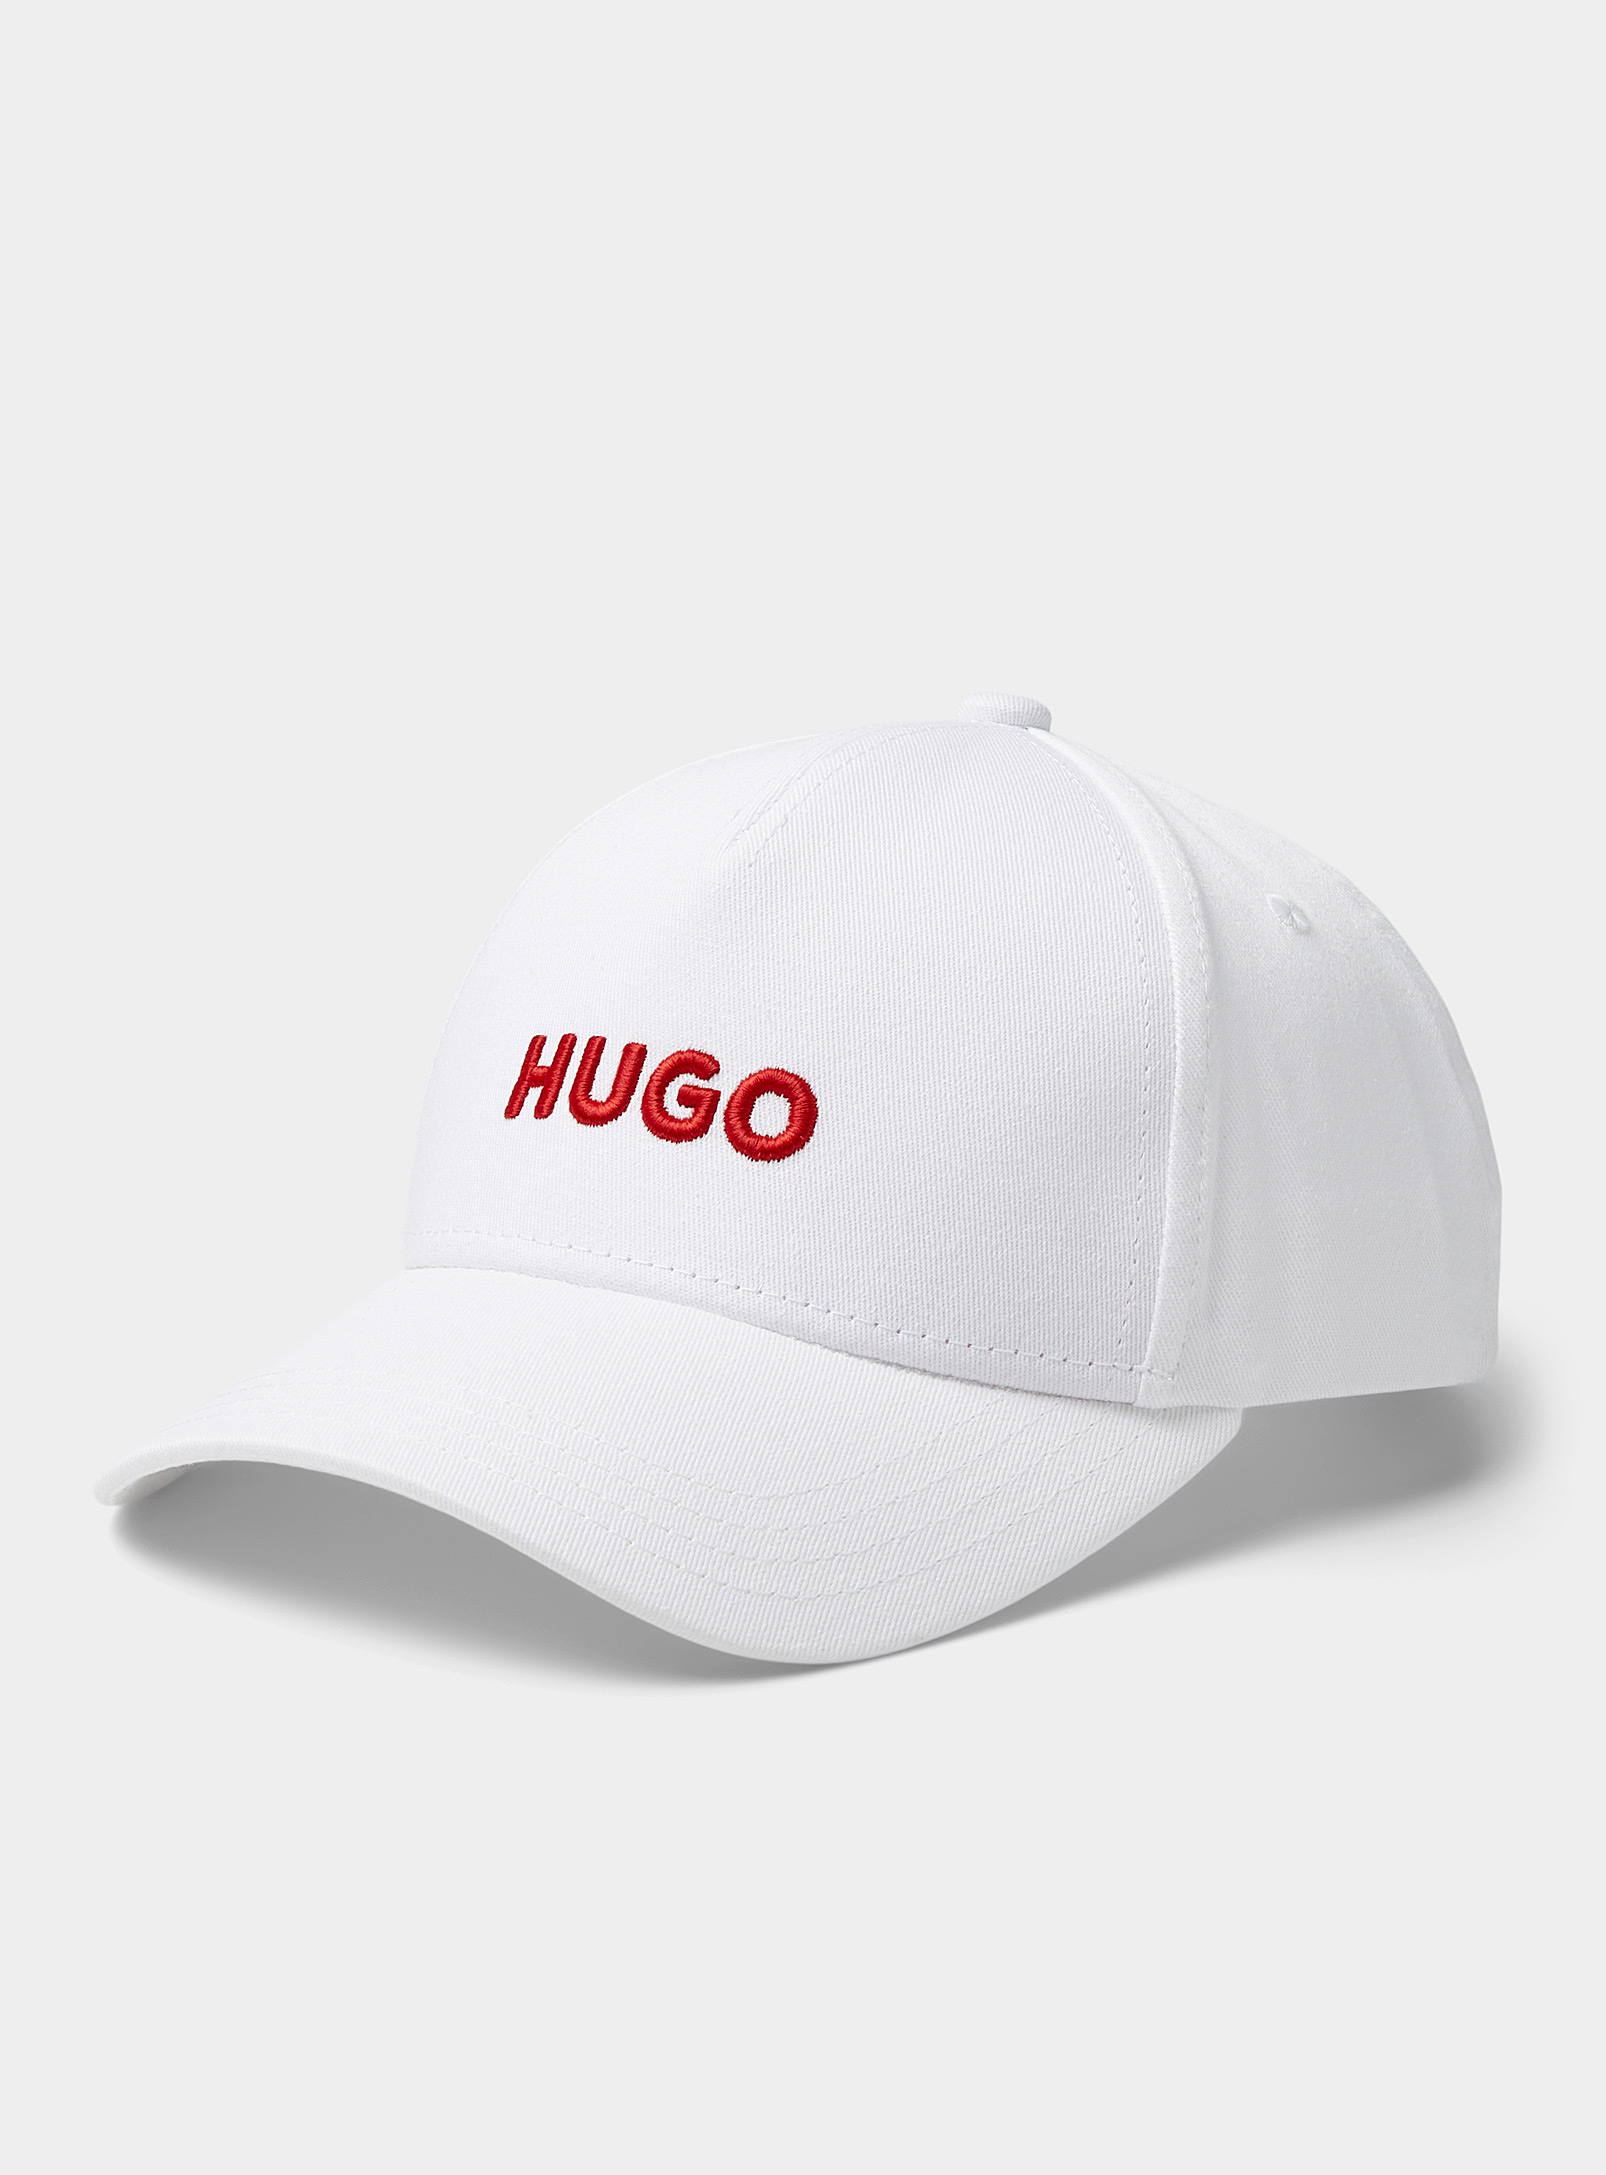 HUGO - La casquette blanche logo rouge